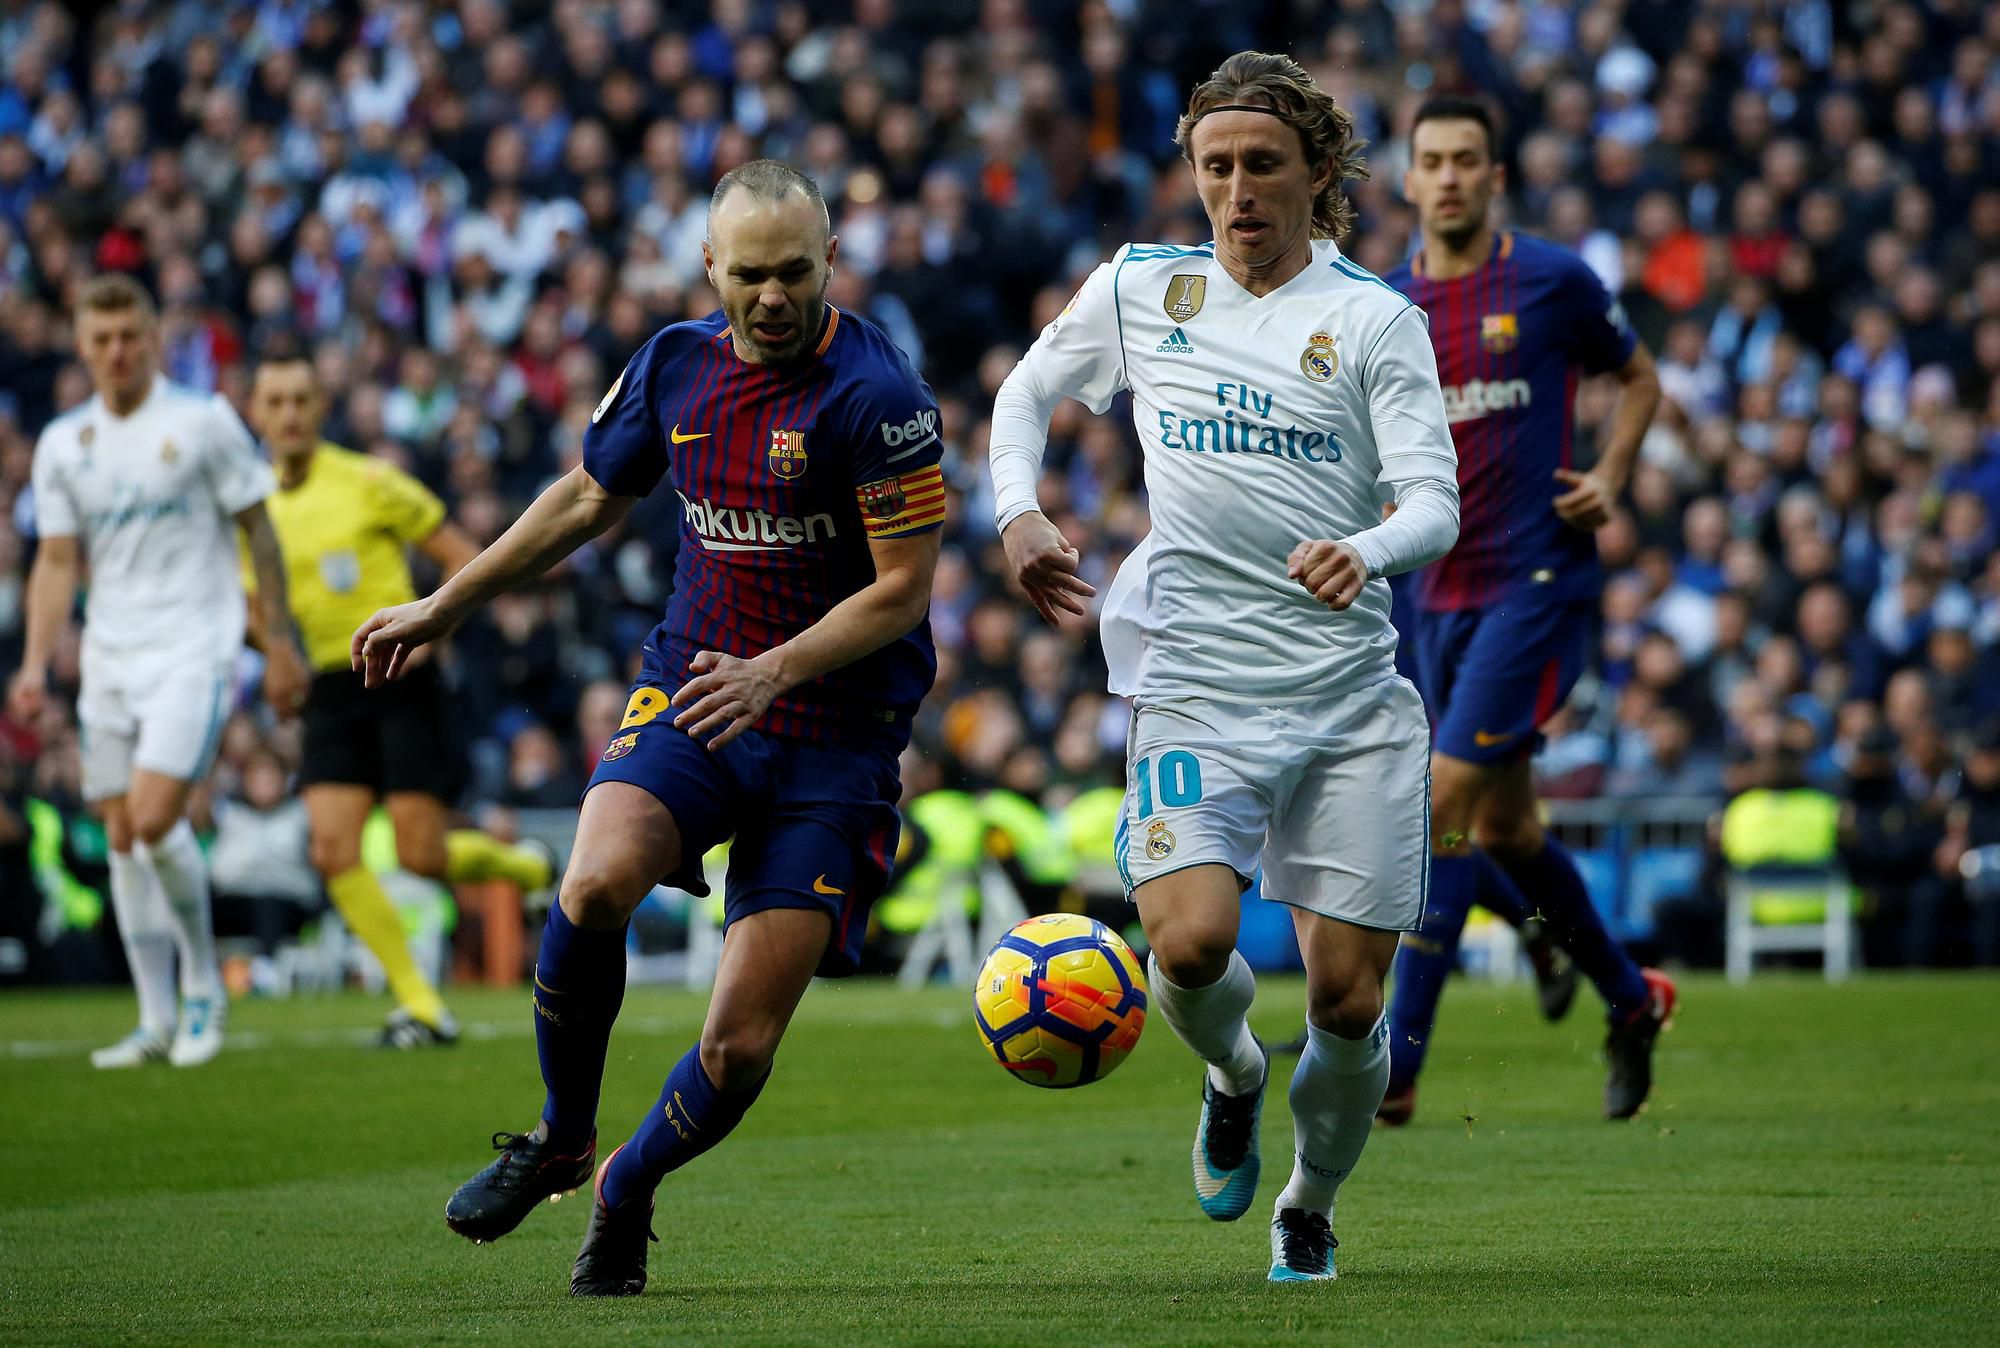 Andres Iniesta (FC Barcelona) a Luka Modrič (Real Madrid).